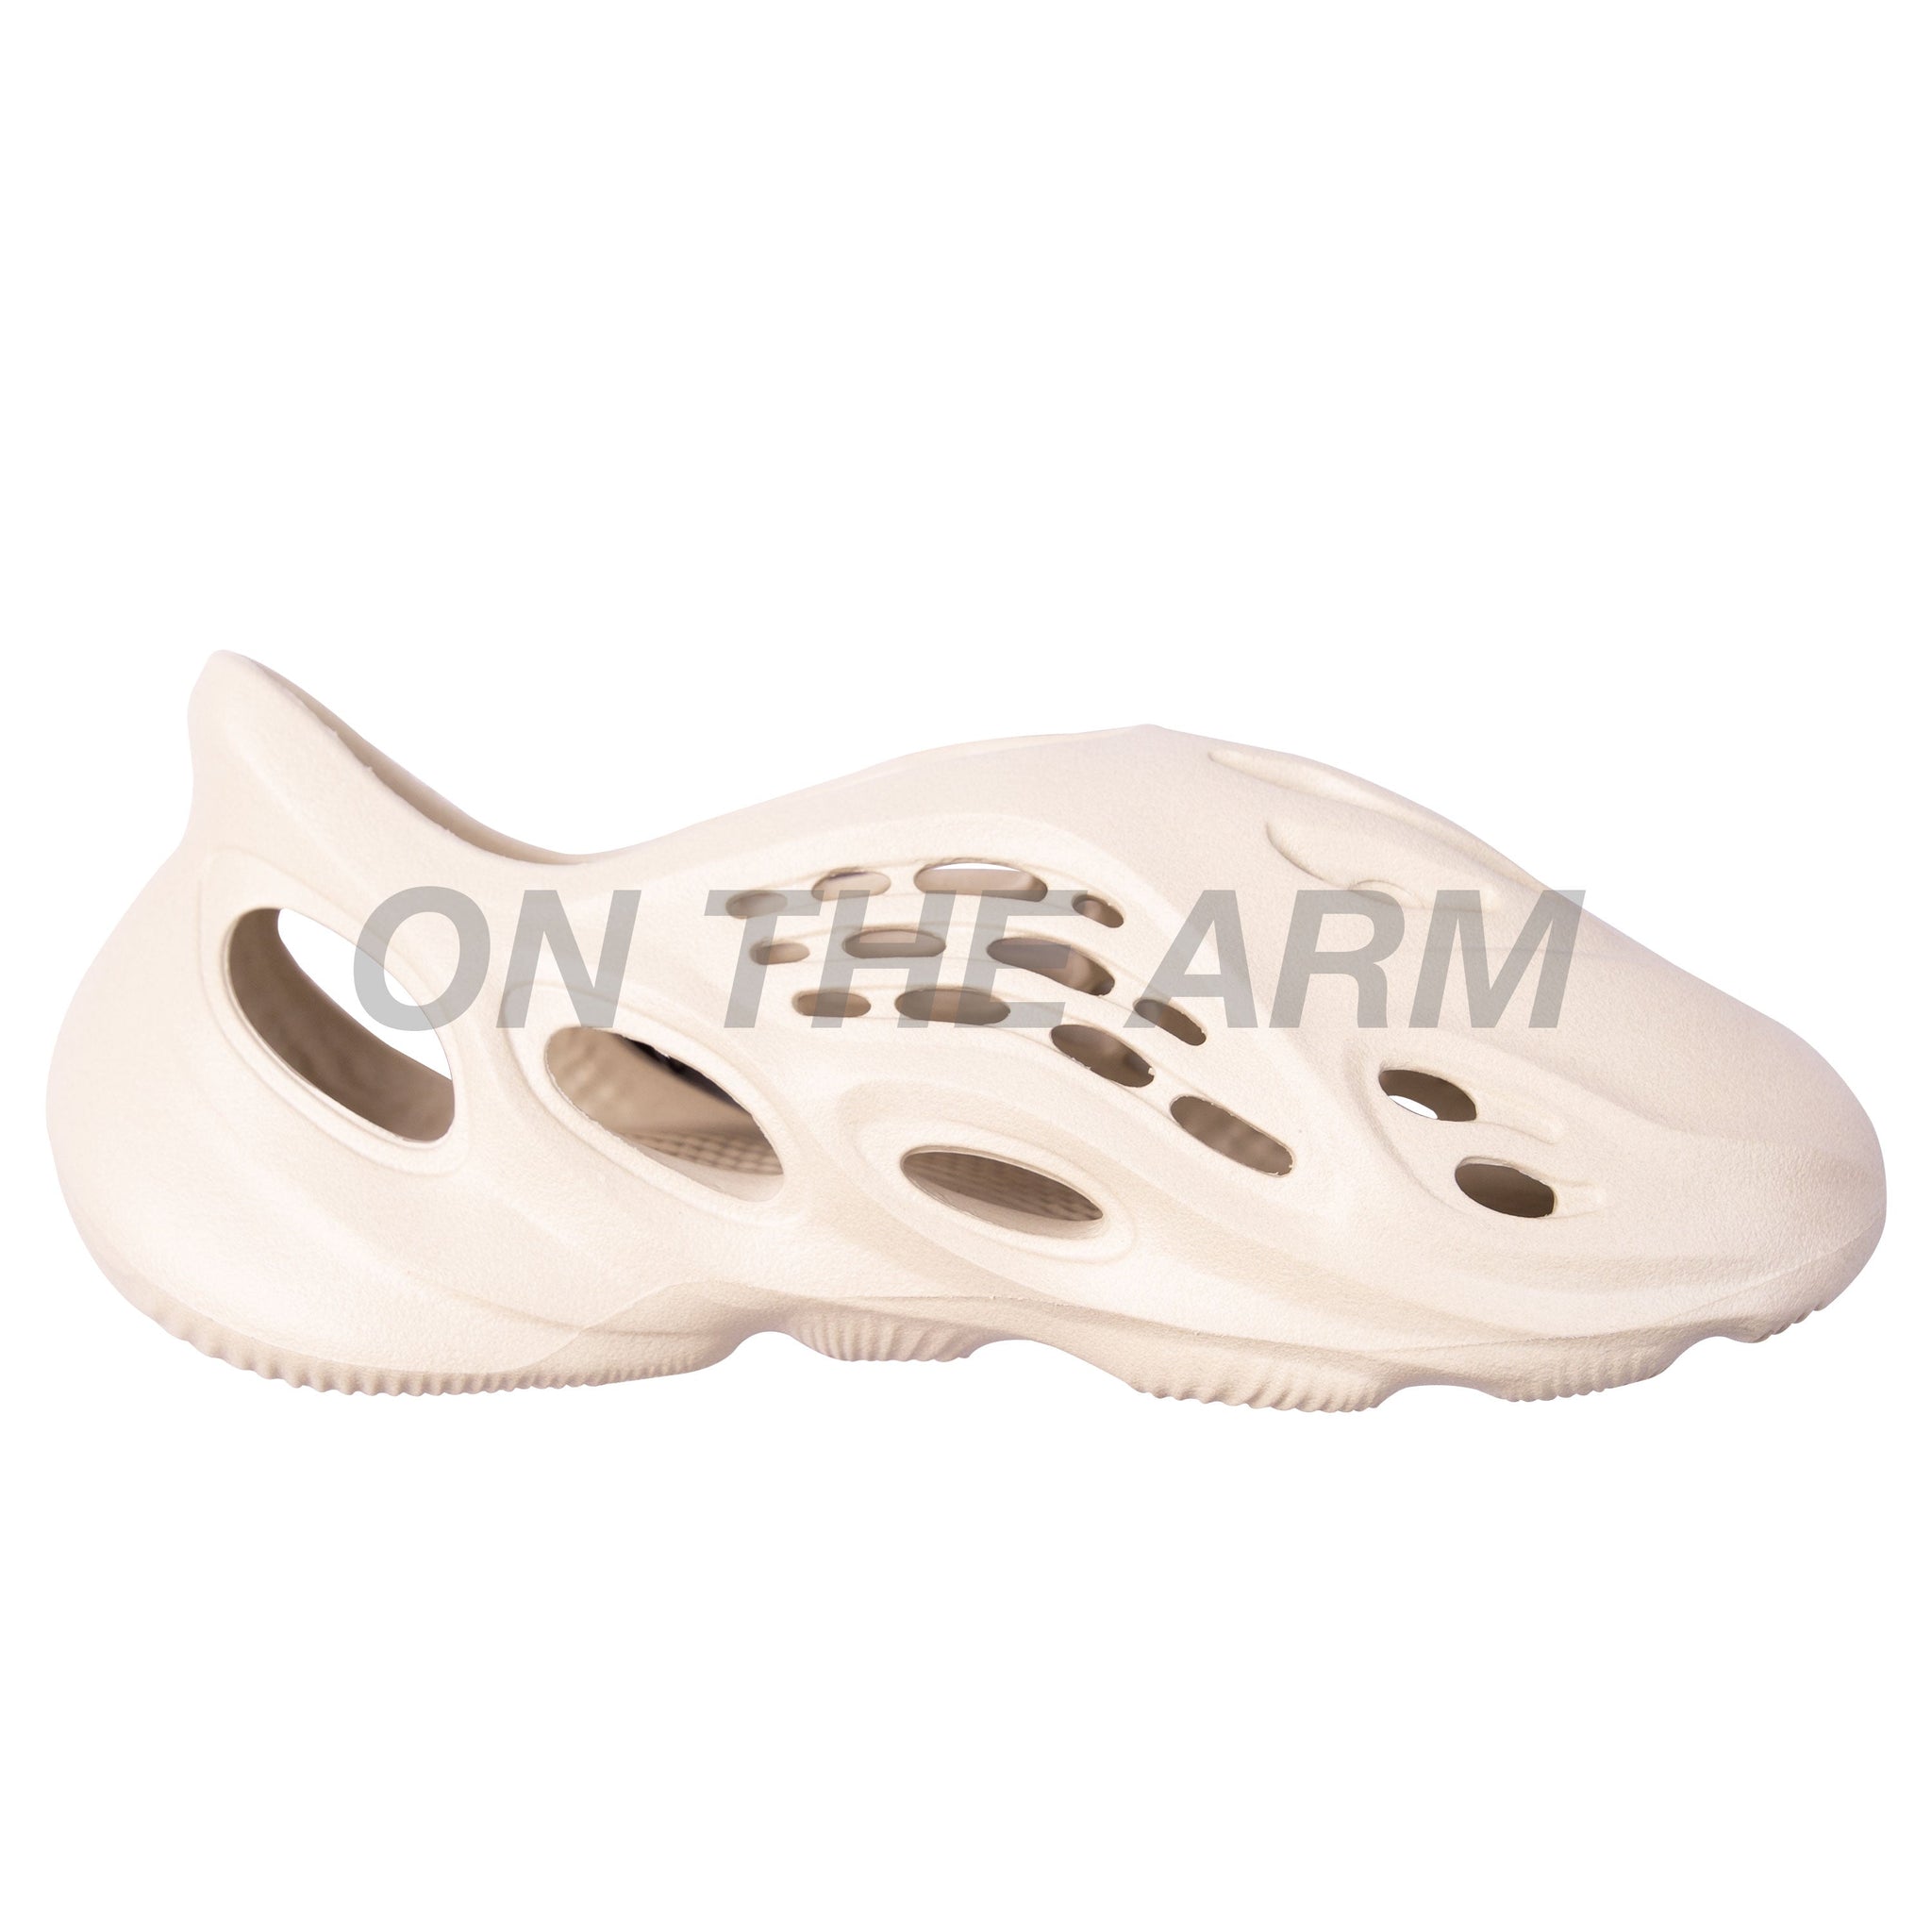 Adidas Sand Yeezy Foam Runner